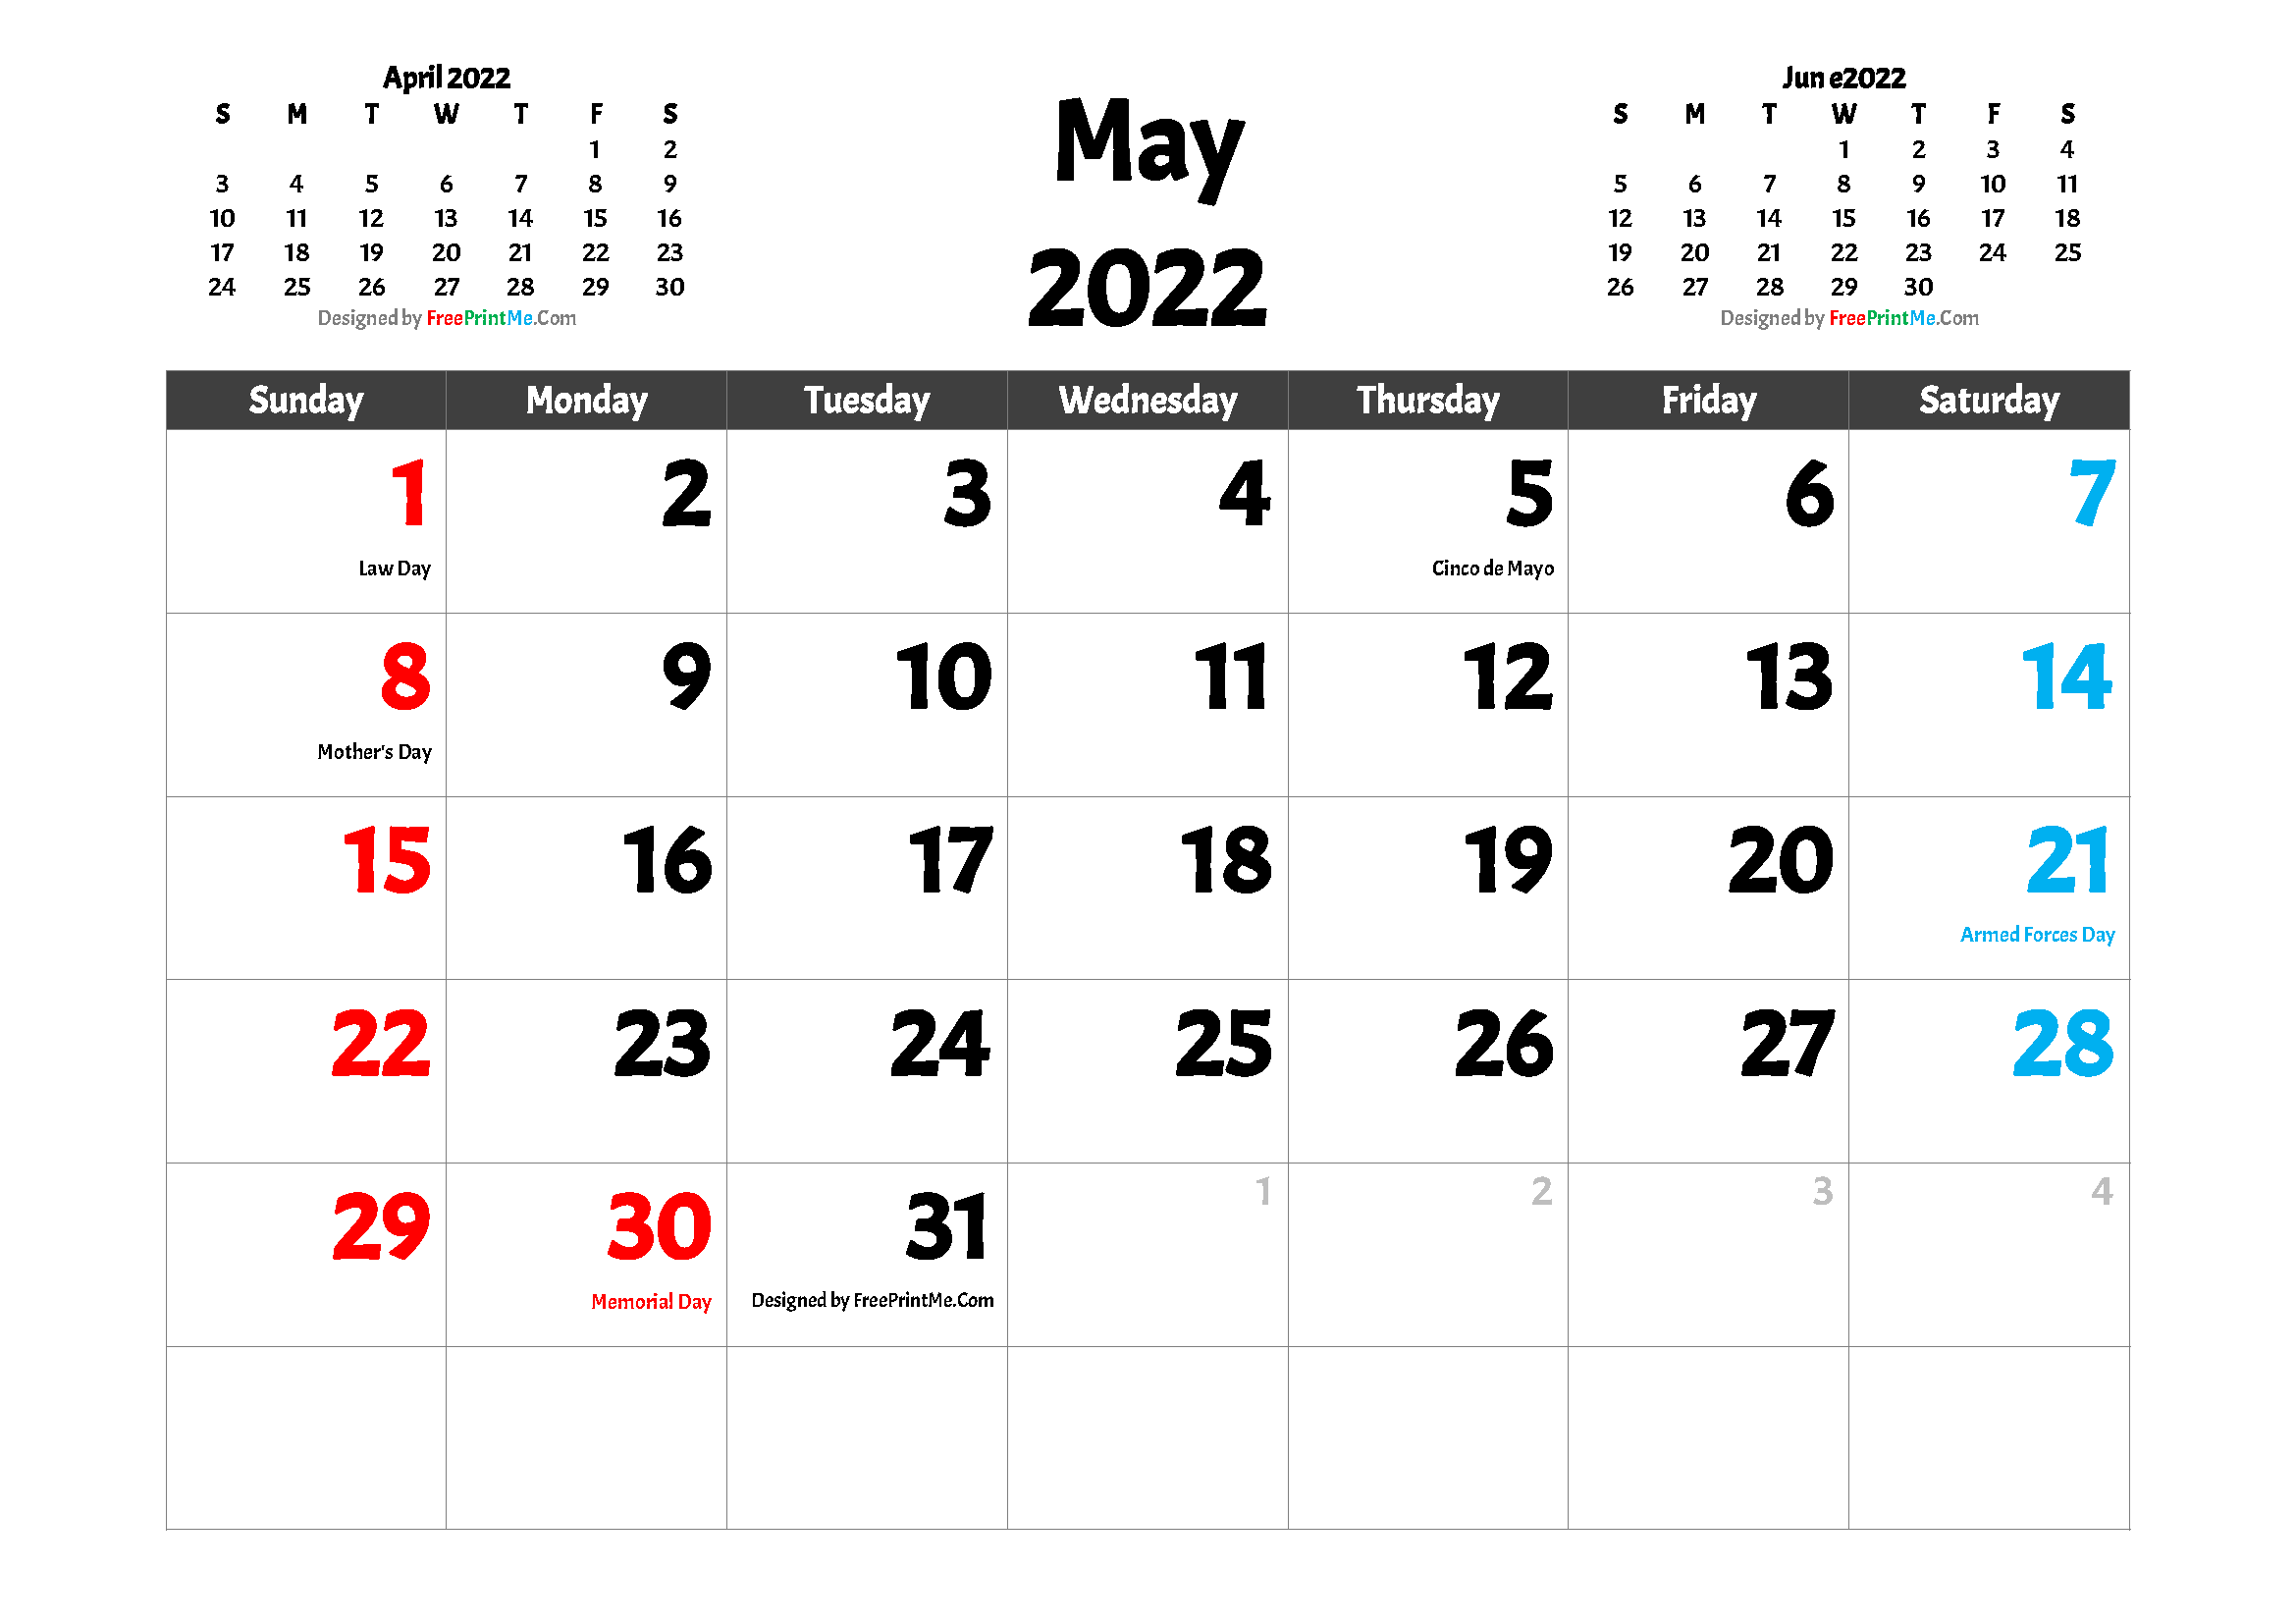 May 2022 Holiday Calendar Free Printable May 2022 Calendar With Holidays - Freeprintme.com